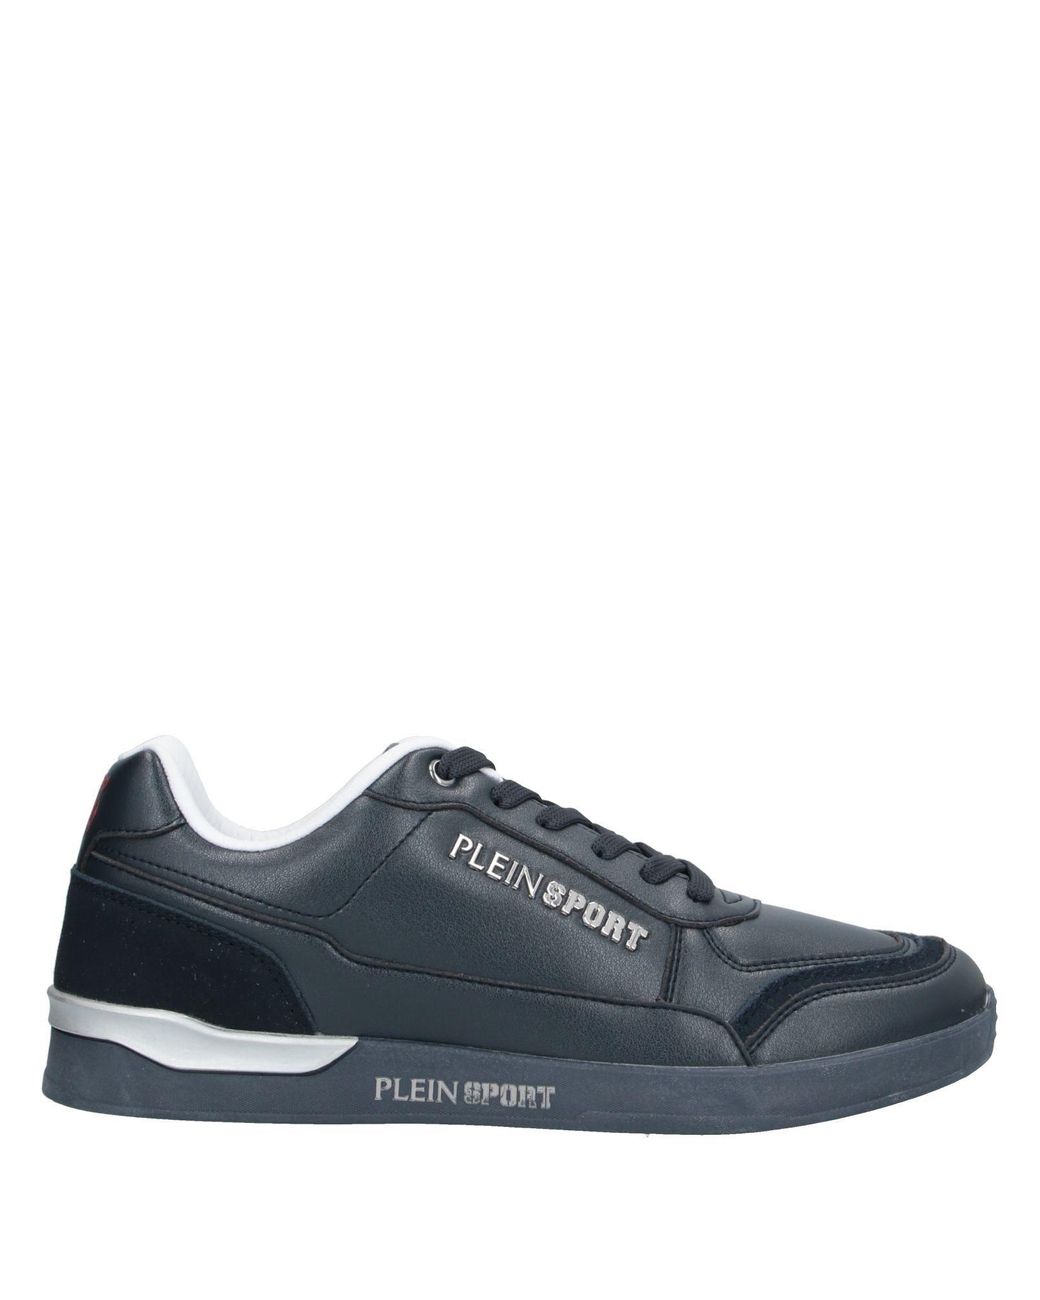 Philipp Plein Suede Low-tops & Sneakers in Dark Blue (Blue) for Men - Lyst